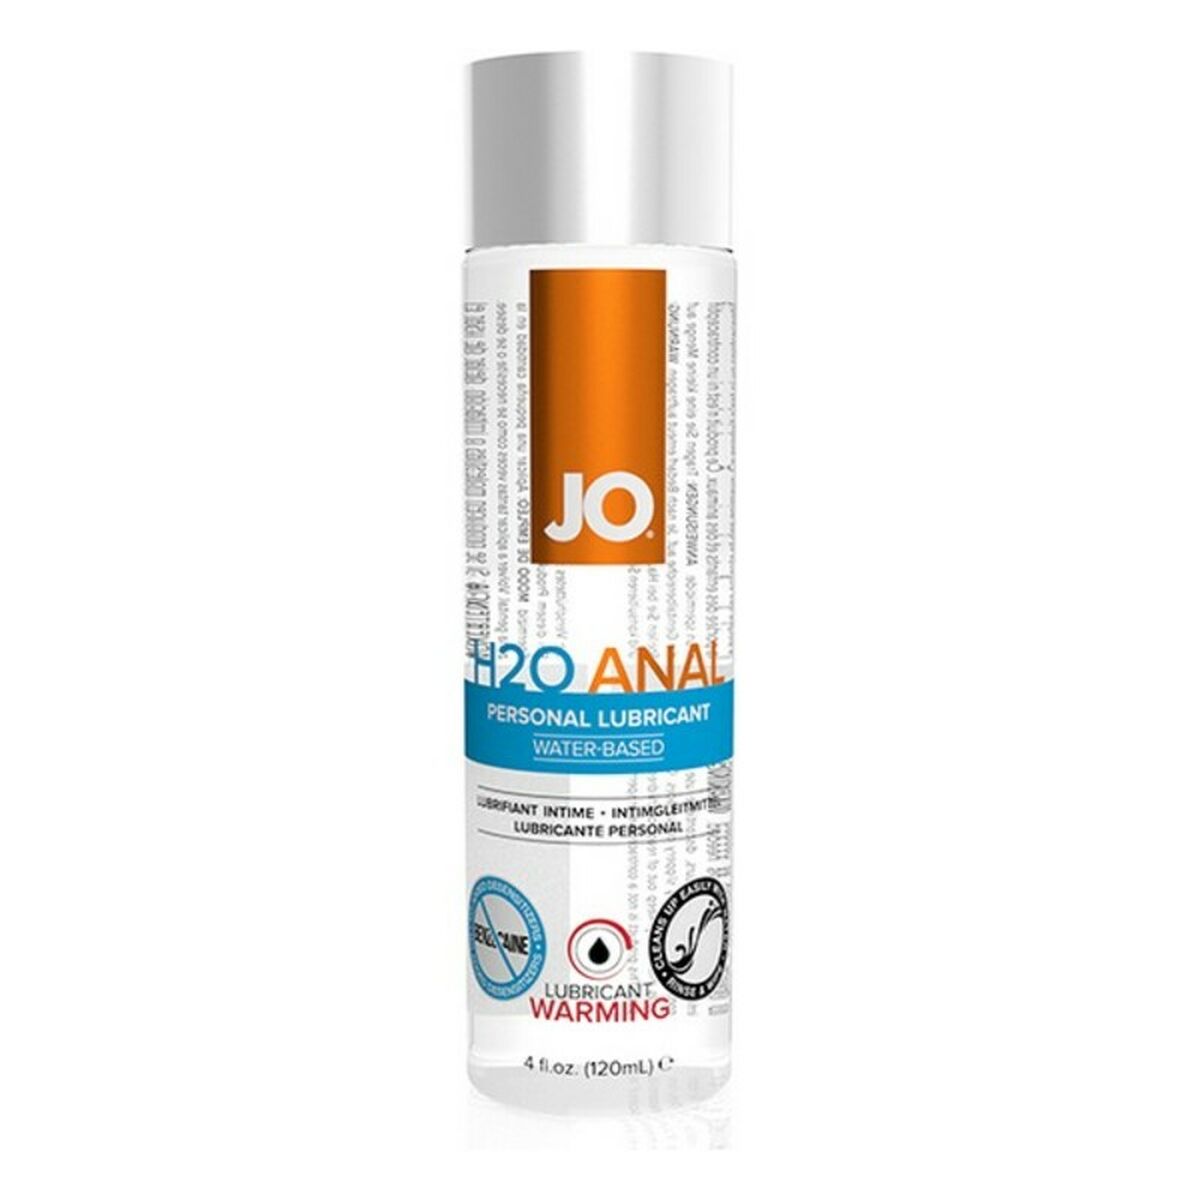 Soojendav anaallibesti H2O 120 ml System Jo 40110